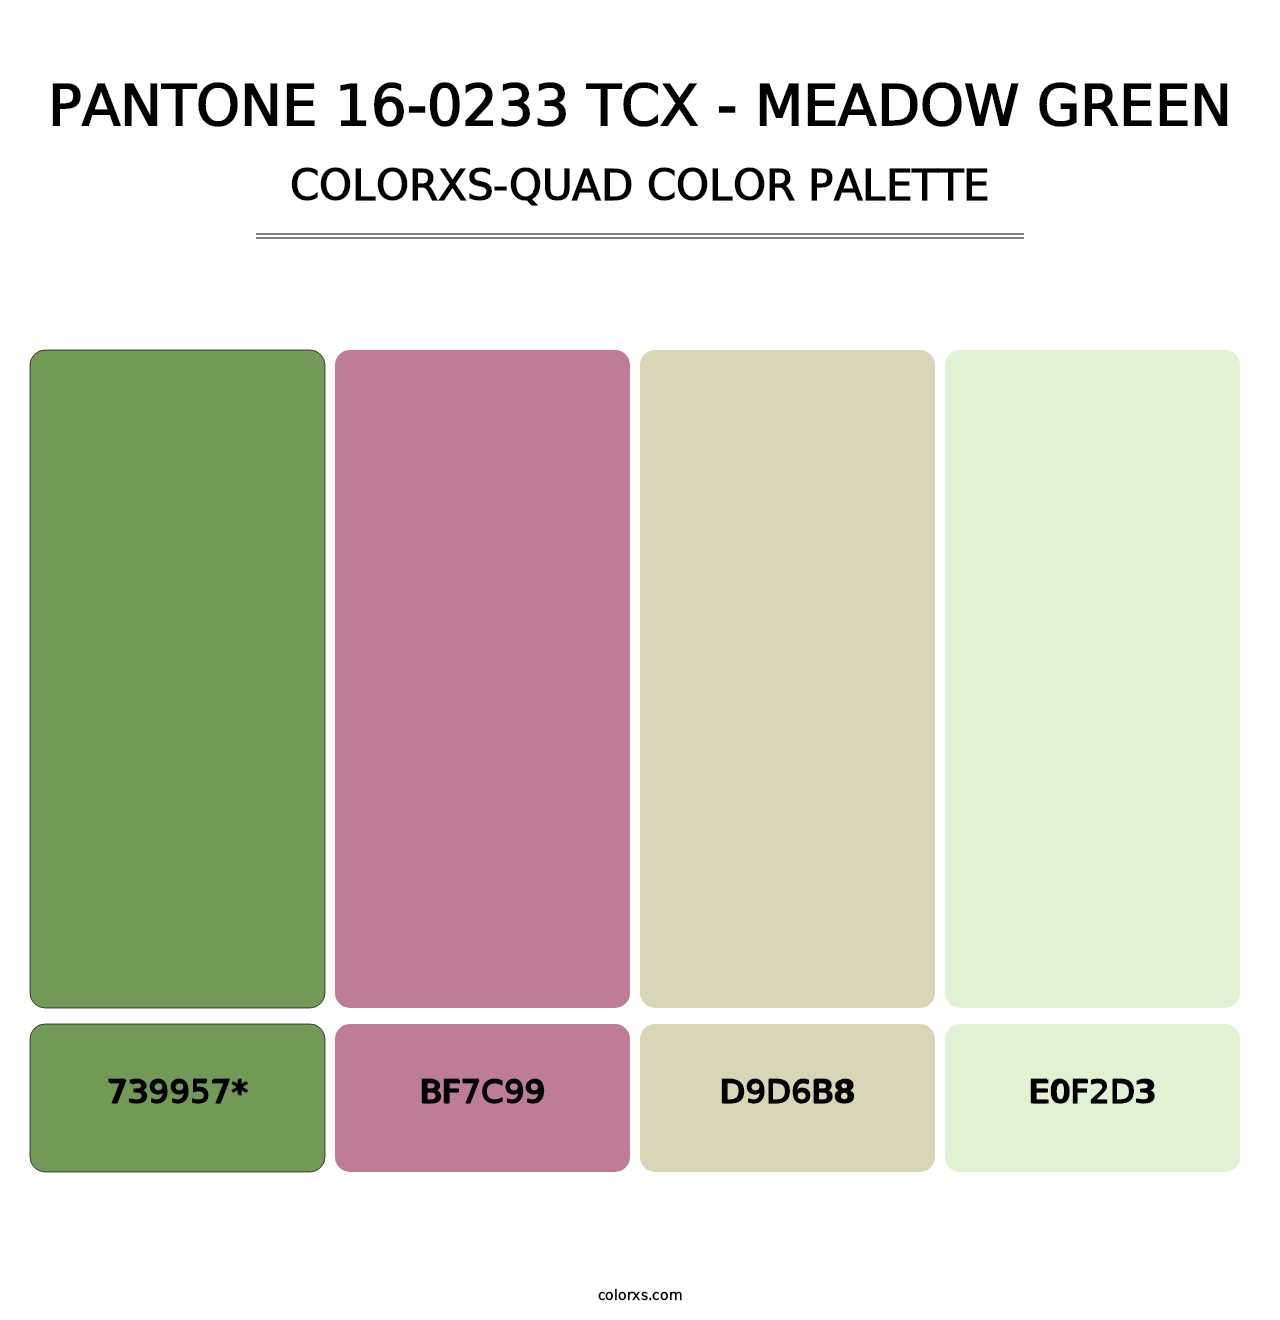 PANTONE 16-0233 TCX - Meadow Green - Colorxs Quad Palette